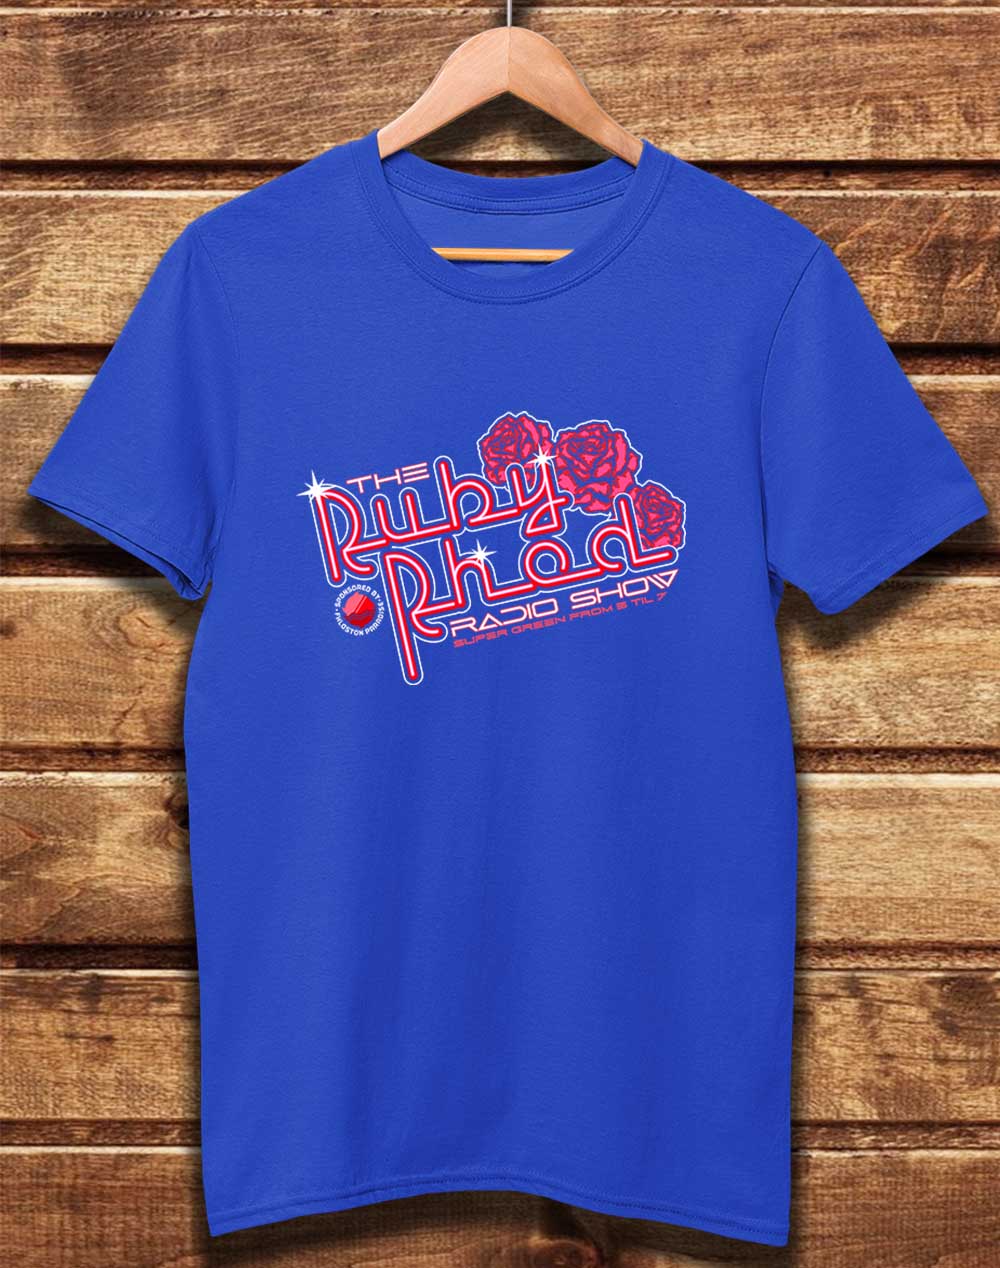 Bright Blue - DELUXE Ruby Rhod Radio Show Organic Cotton T-Shirt